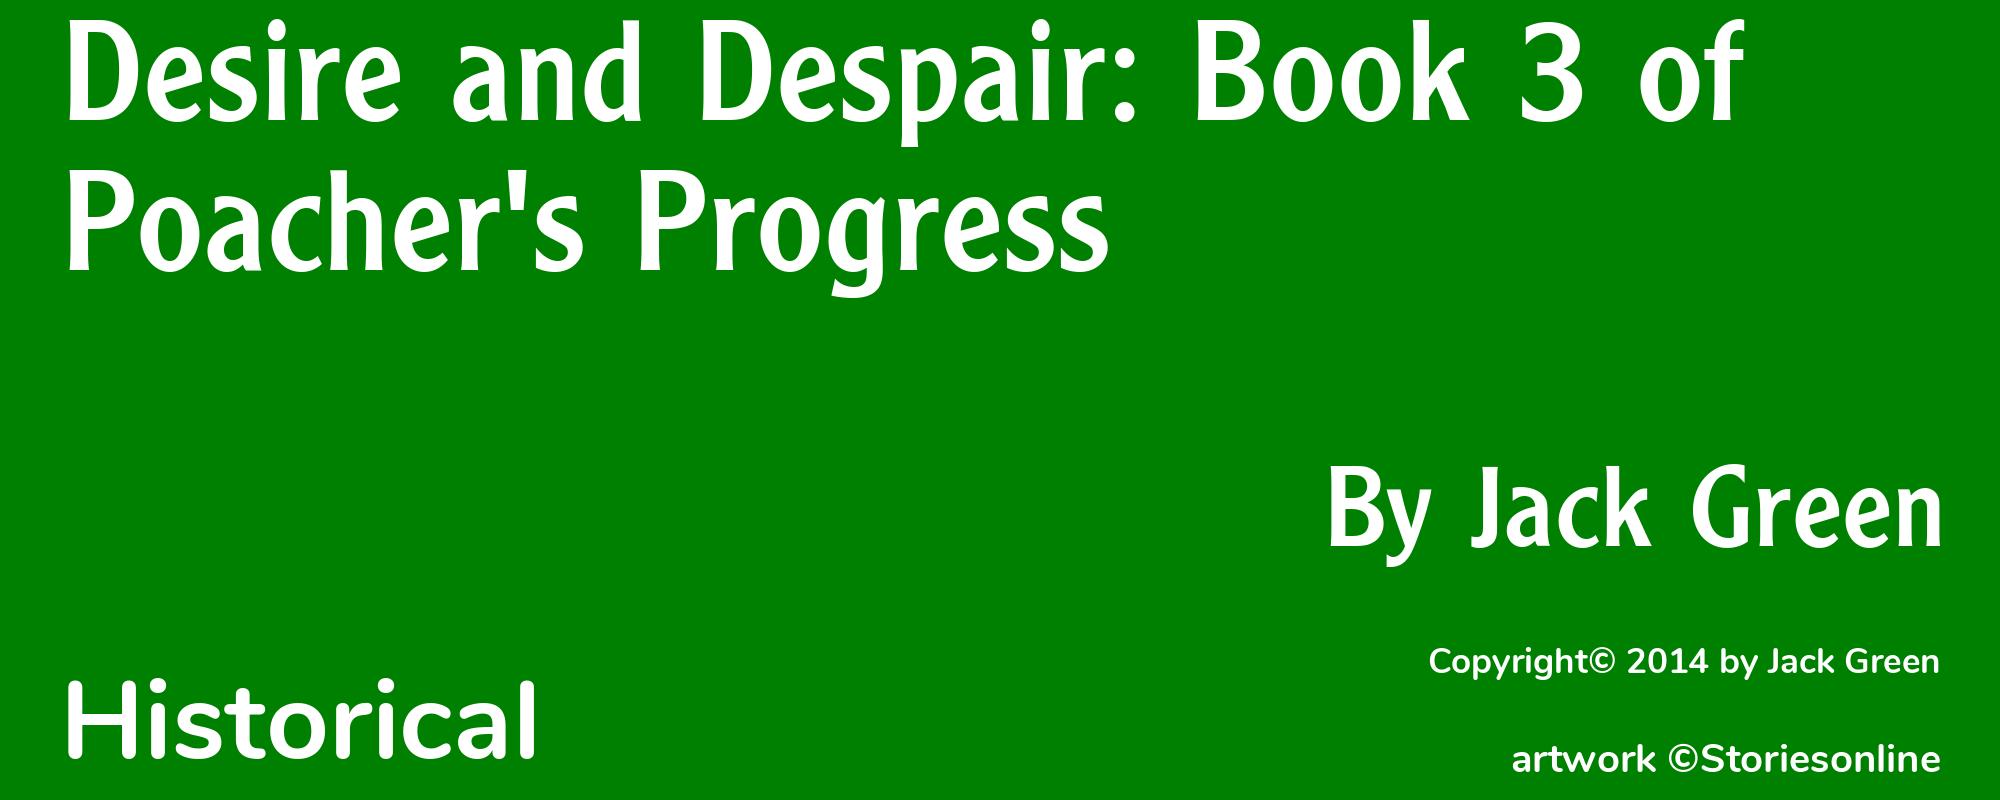 Desire and Despair: Book 3 of Poacher's Progress - Cover